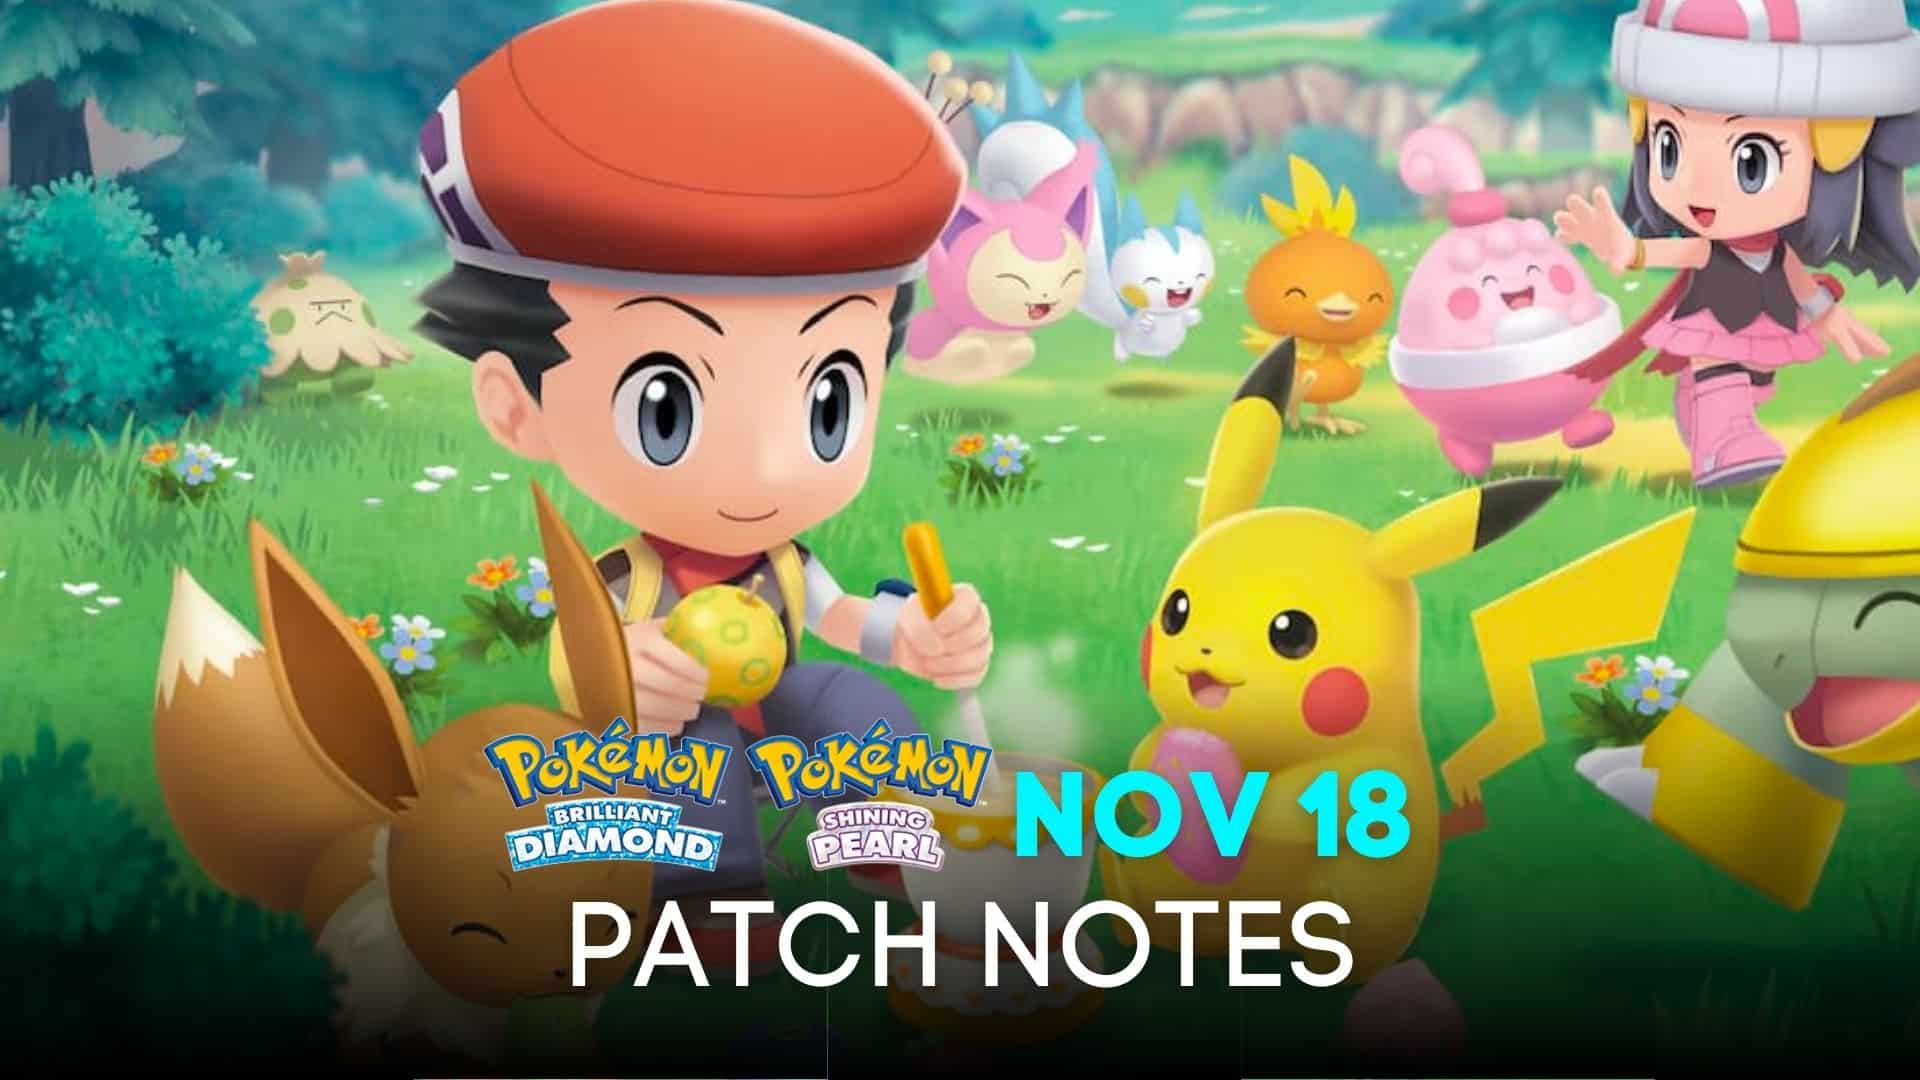 Pokemon Brilliant Diamond / Shining Pearl ver 1.1.0 update patch notes